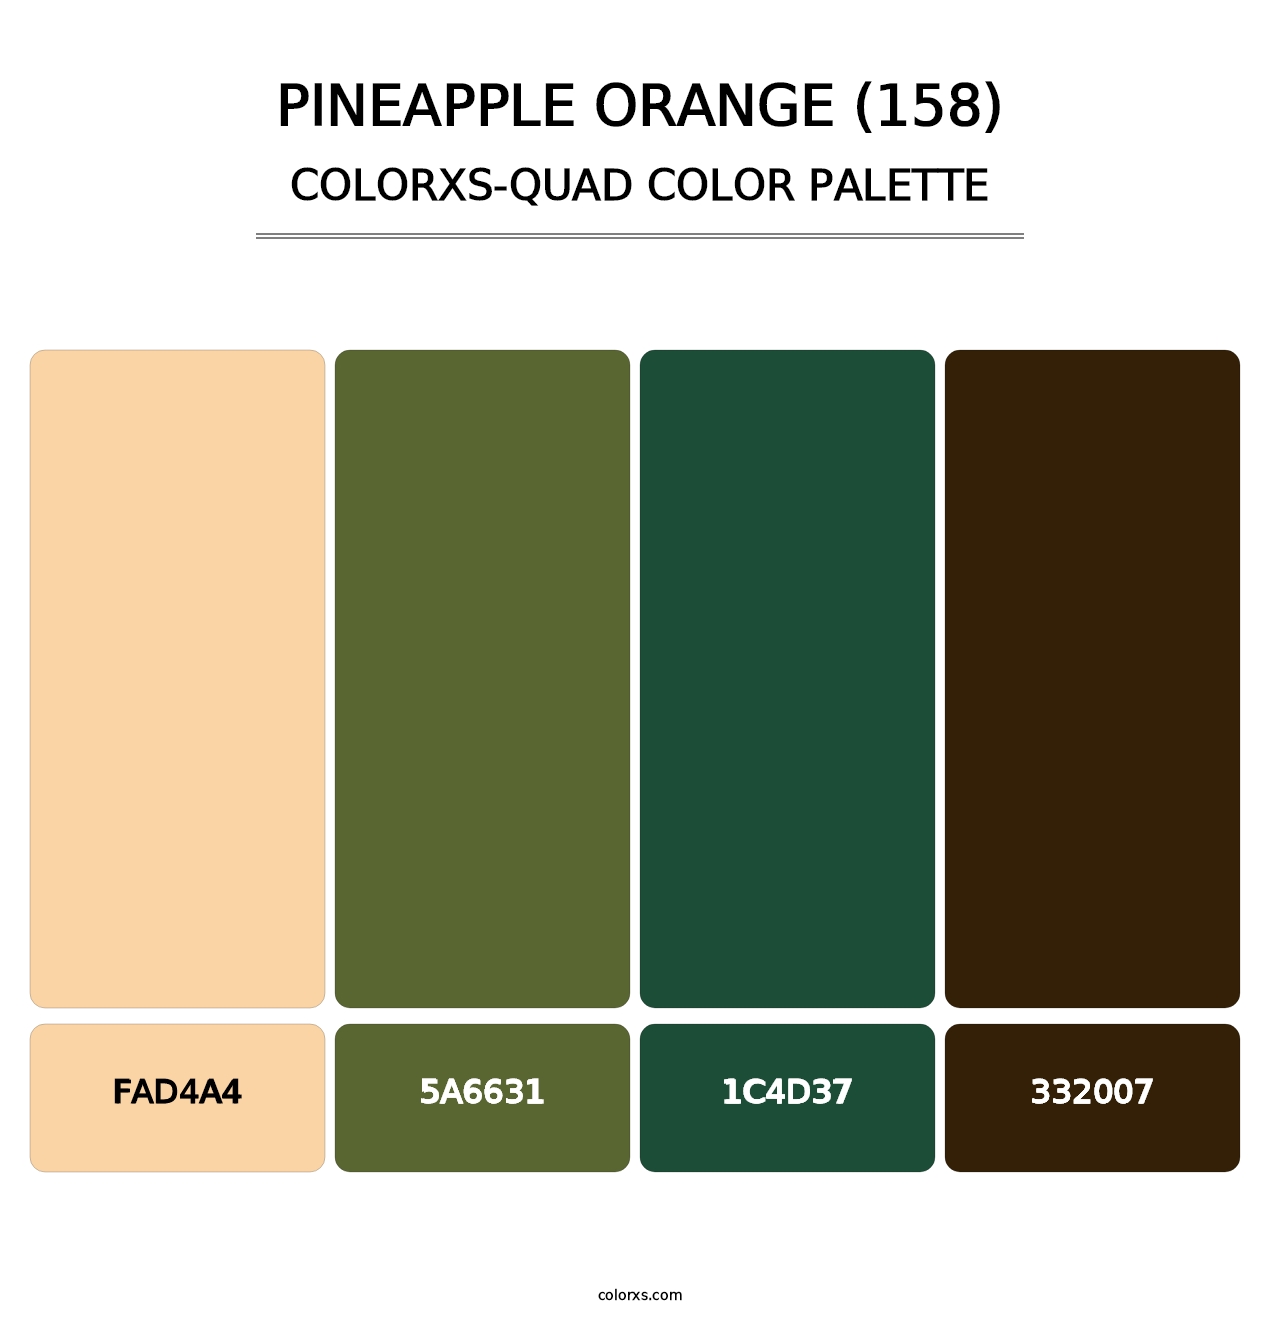 Pineapple Orange (158) - Colorxs Quad Palette